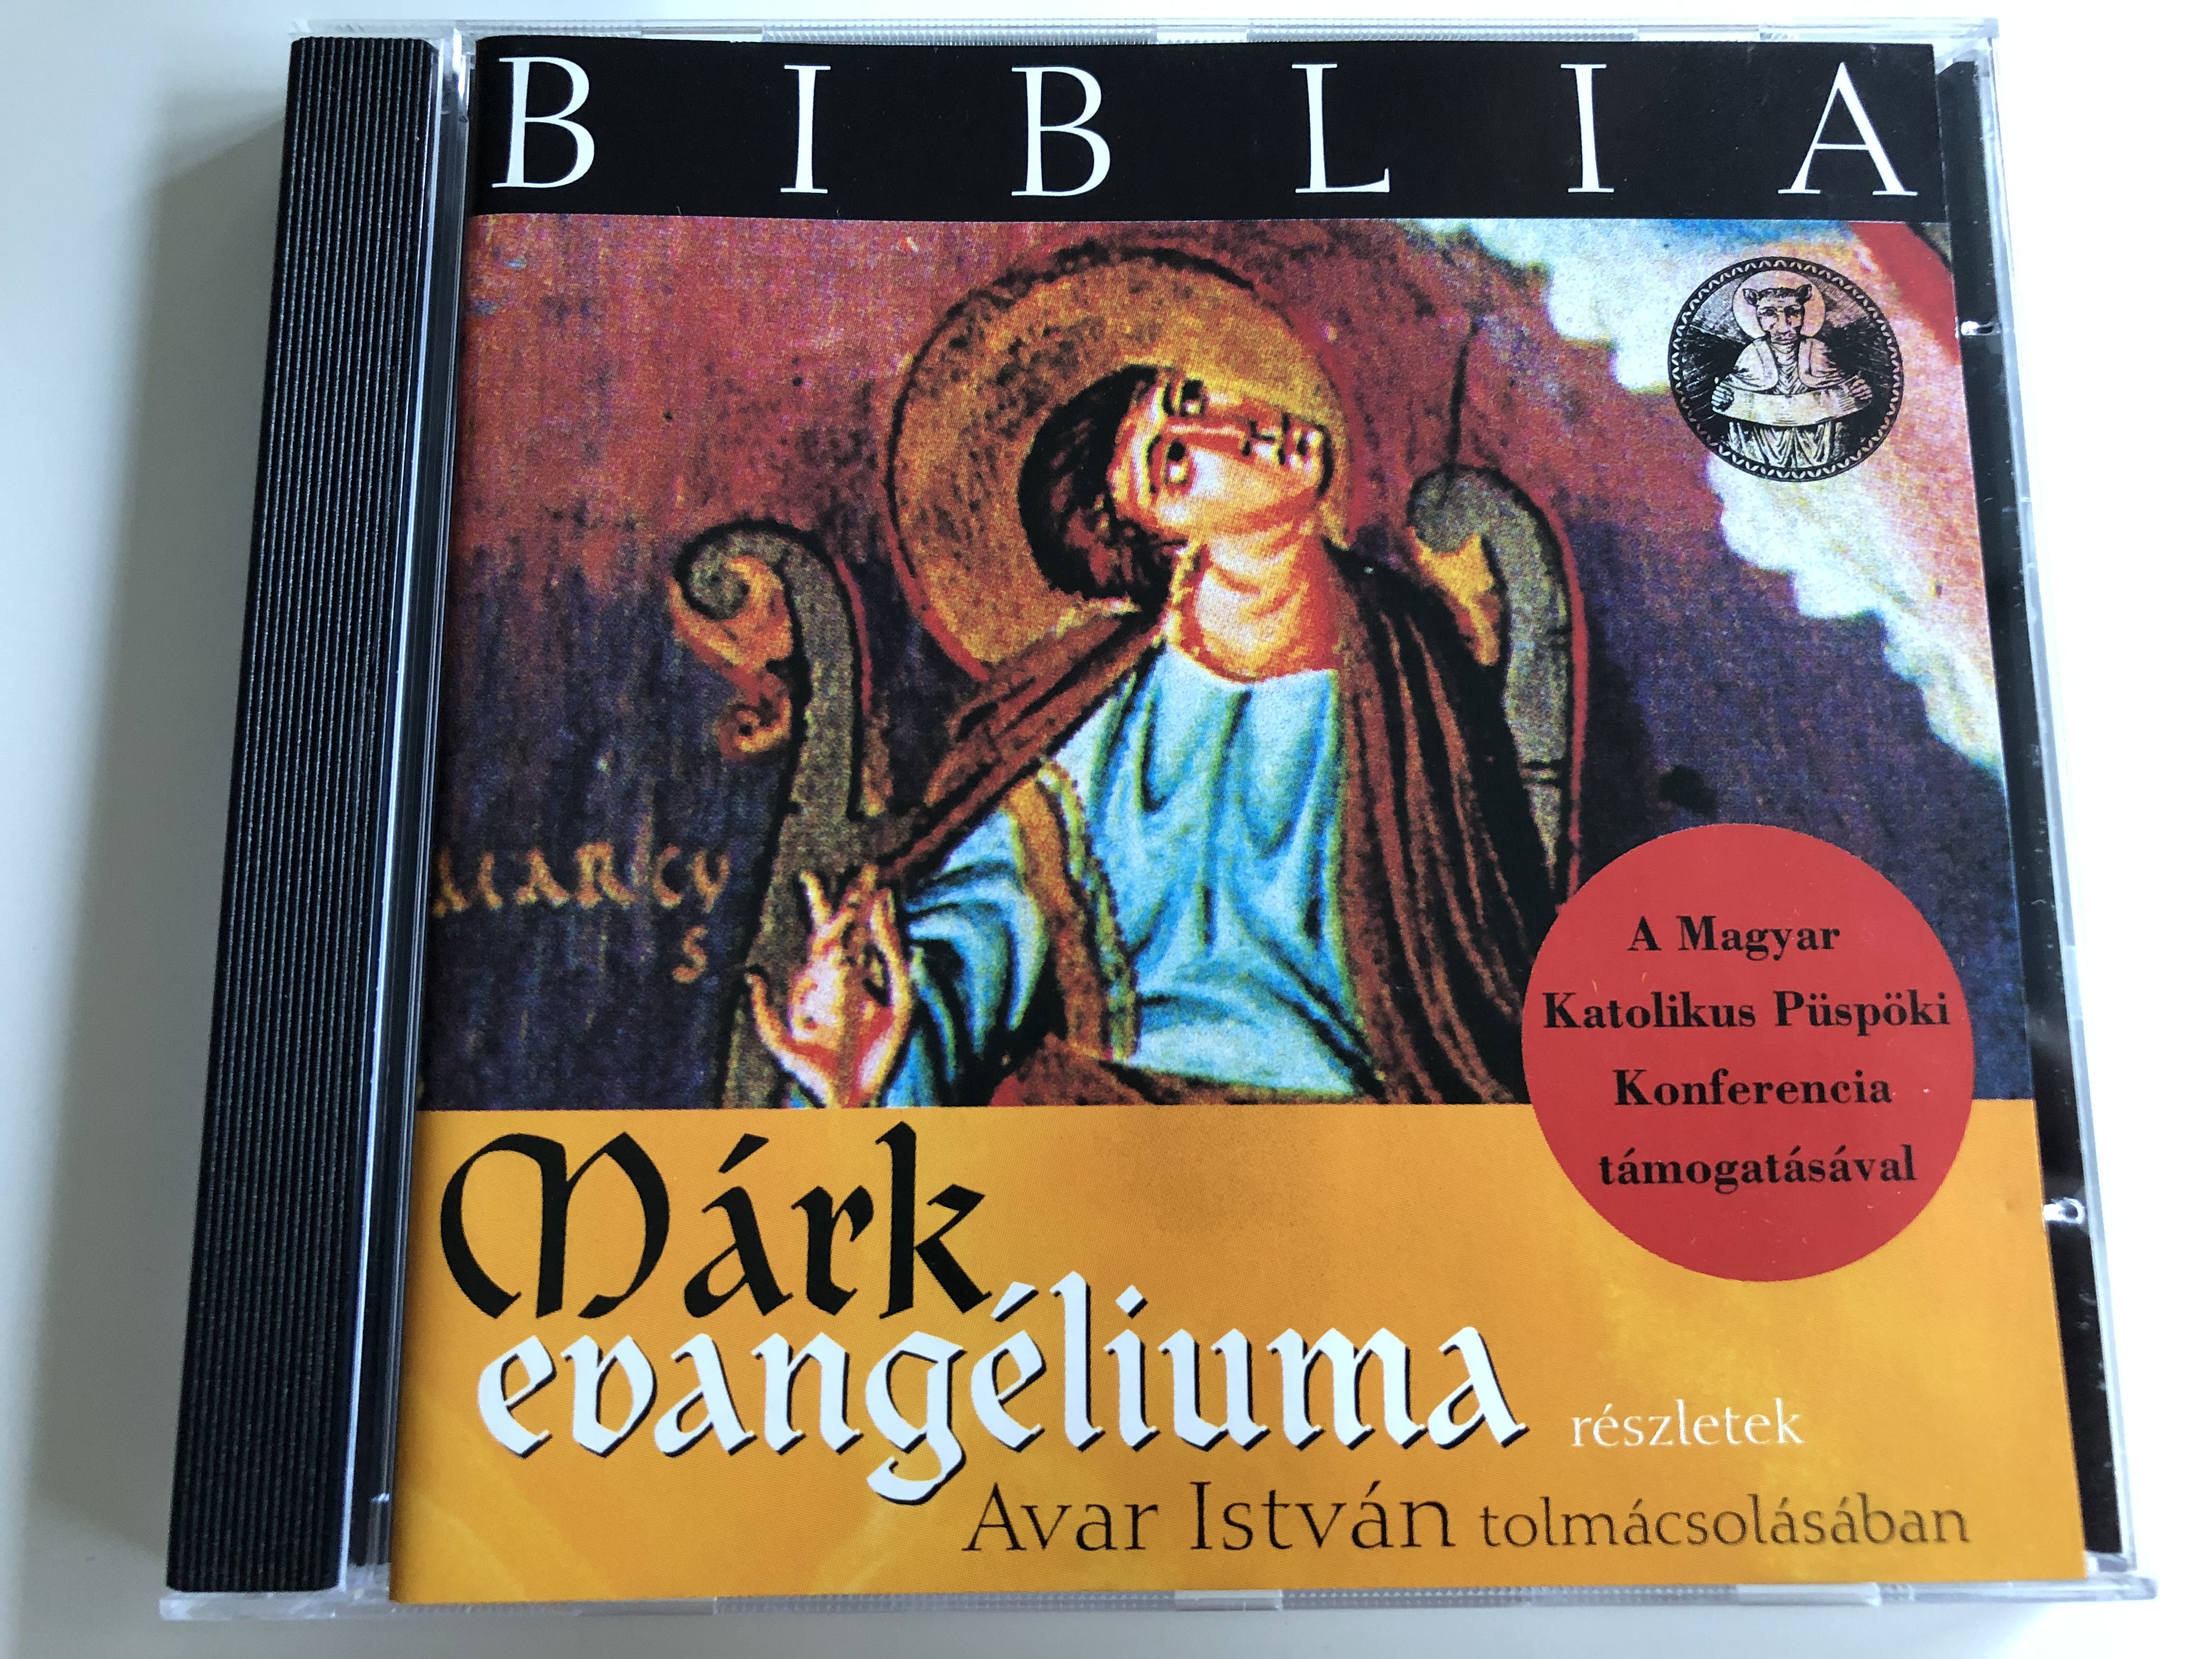 biblia-m-rk-evang-liuma-r-szletek-avar-istv-n-tolm-csol-s-ban-audio-cd-a-magyar-katolikus-p-sp-ki-konferencia-t-mogat-s-val-hungarian-audio-bible-the-gospel-according-to-mark-excerpts-read-by-avar-istv-n-1-.jpg